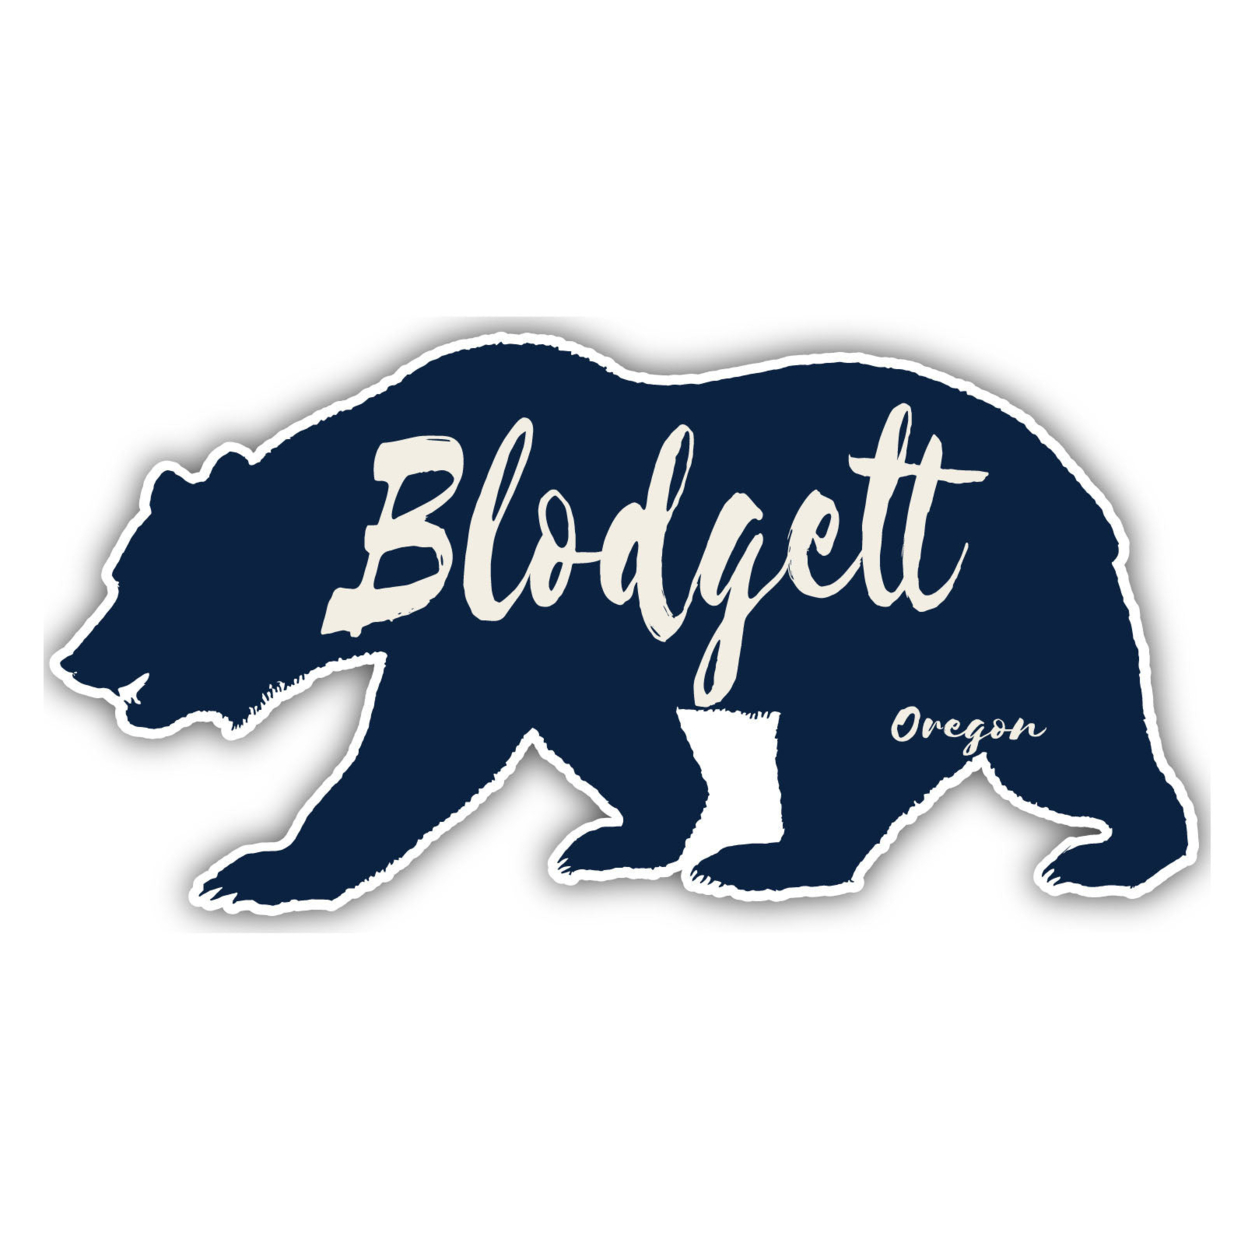 Blodgett Oregon Souvenir Decorative Stickers (Choose Theme And Size) - 4-Pack, 6-Inch, Bear